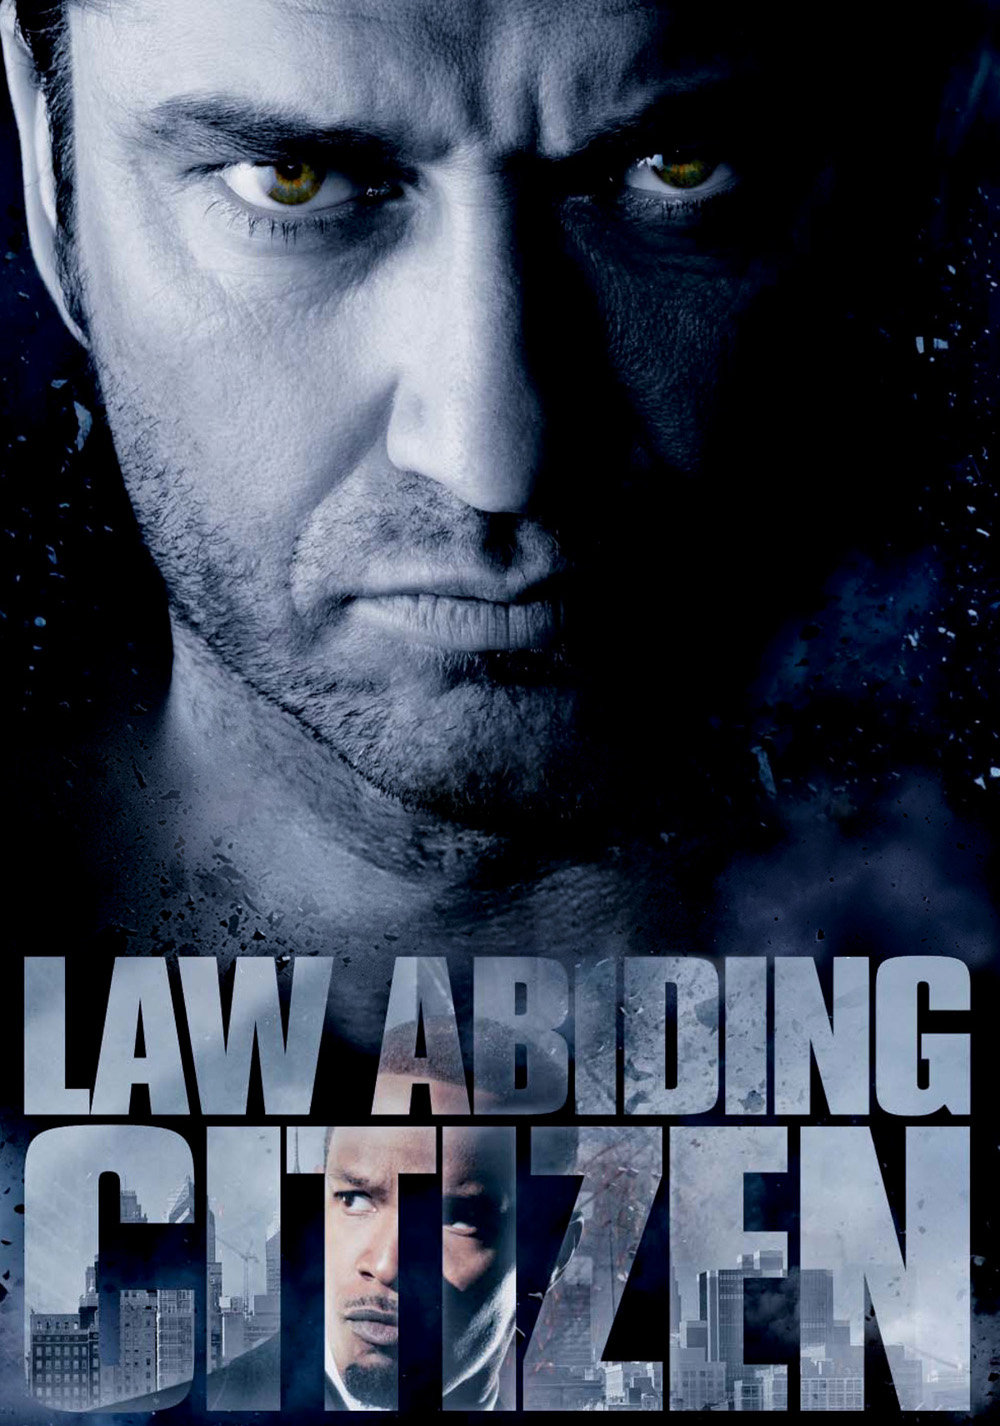 Law Abiding Citizen #2